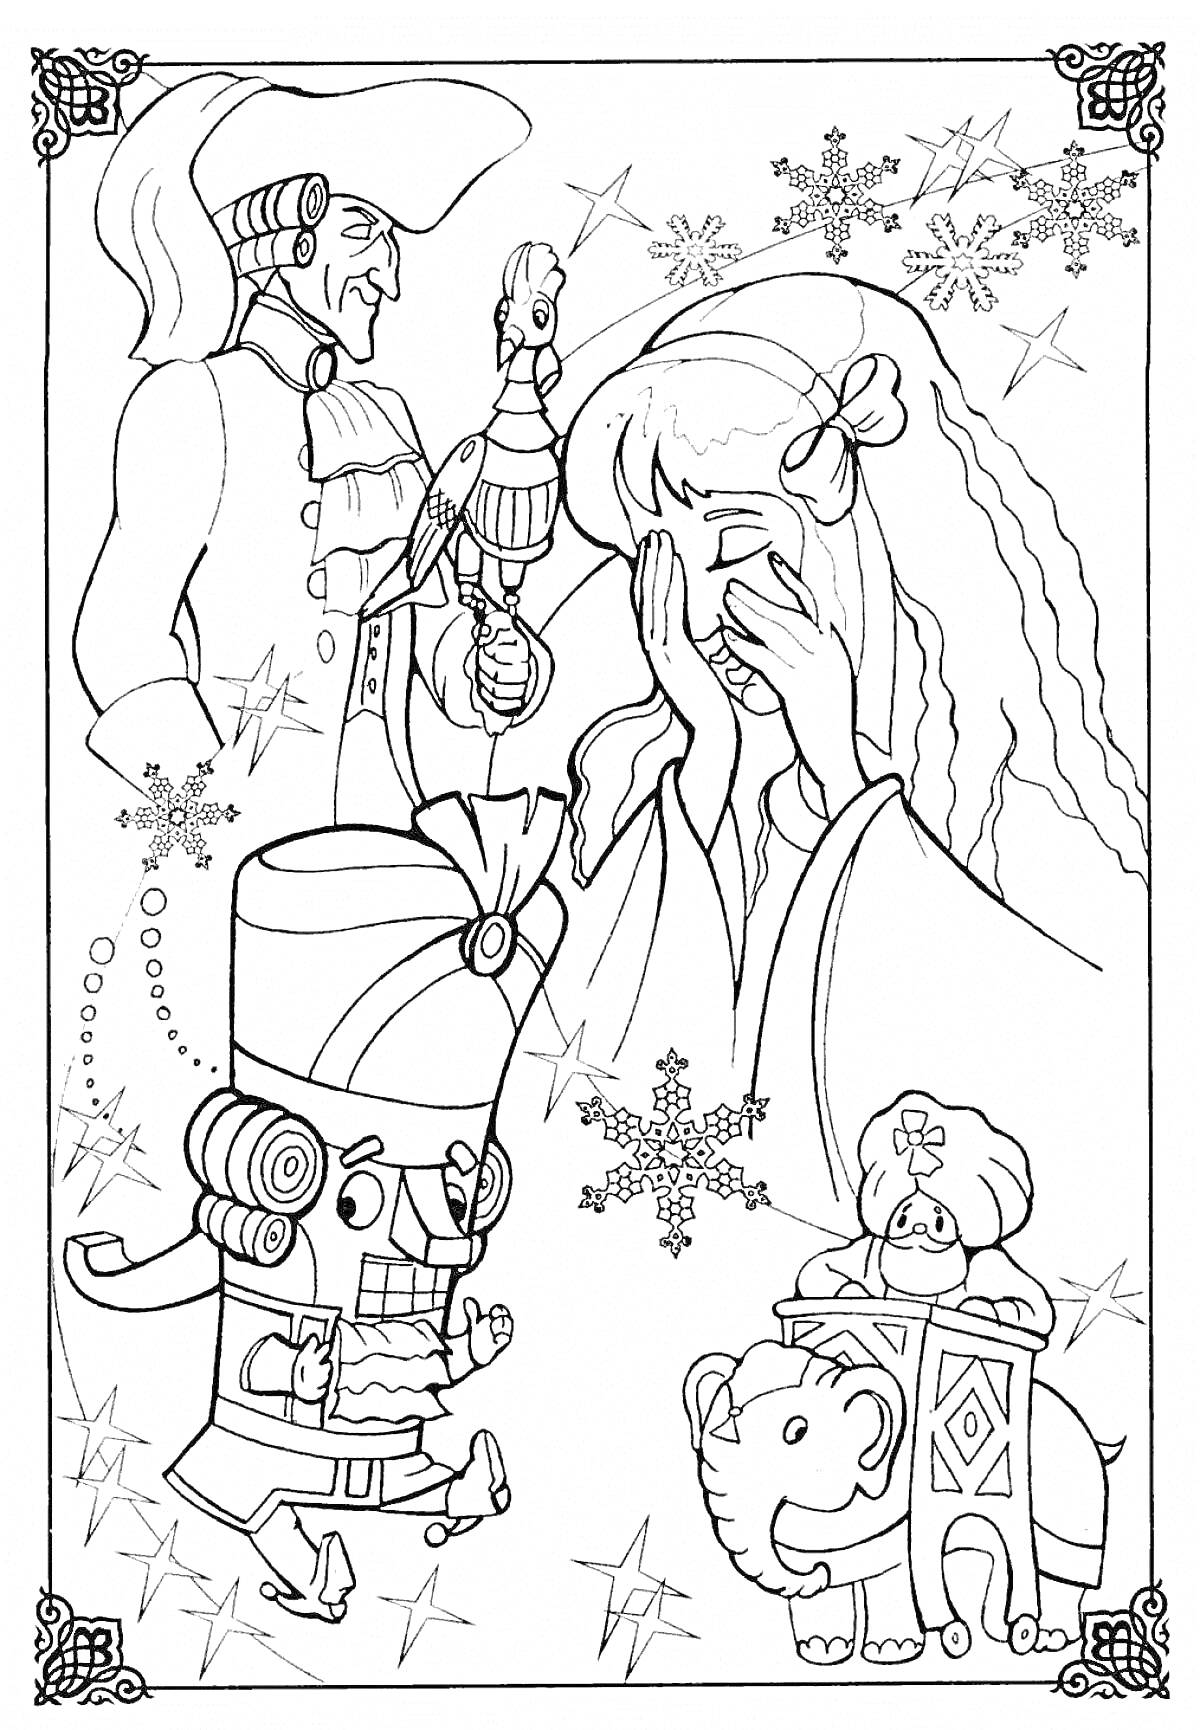 Щелкунчик, девочка с куклой, солдатик, крыса, слон и снежинки